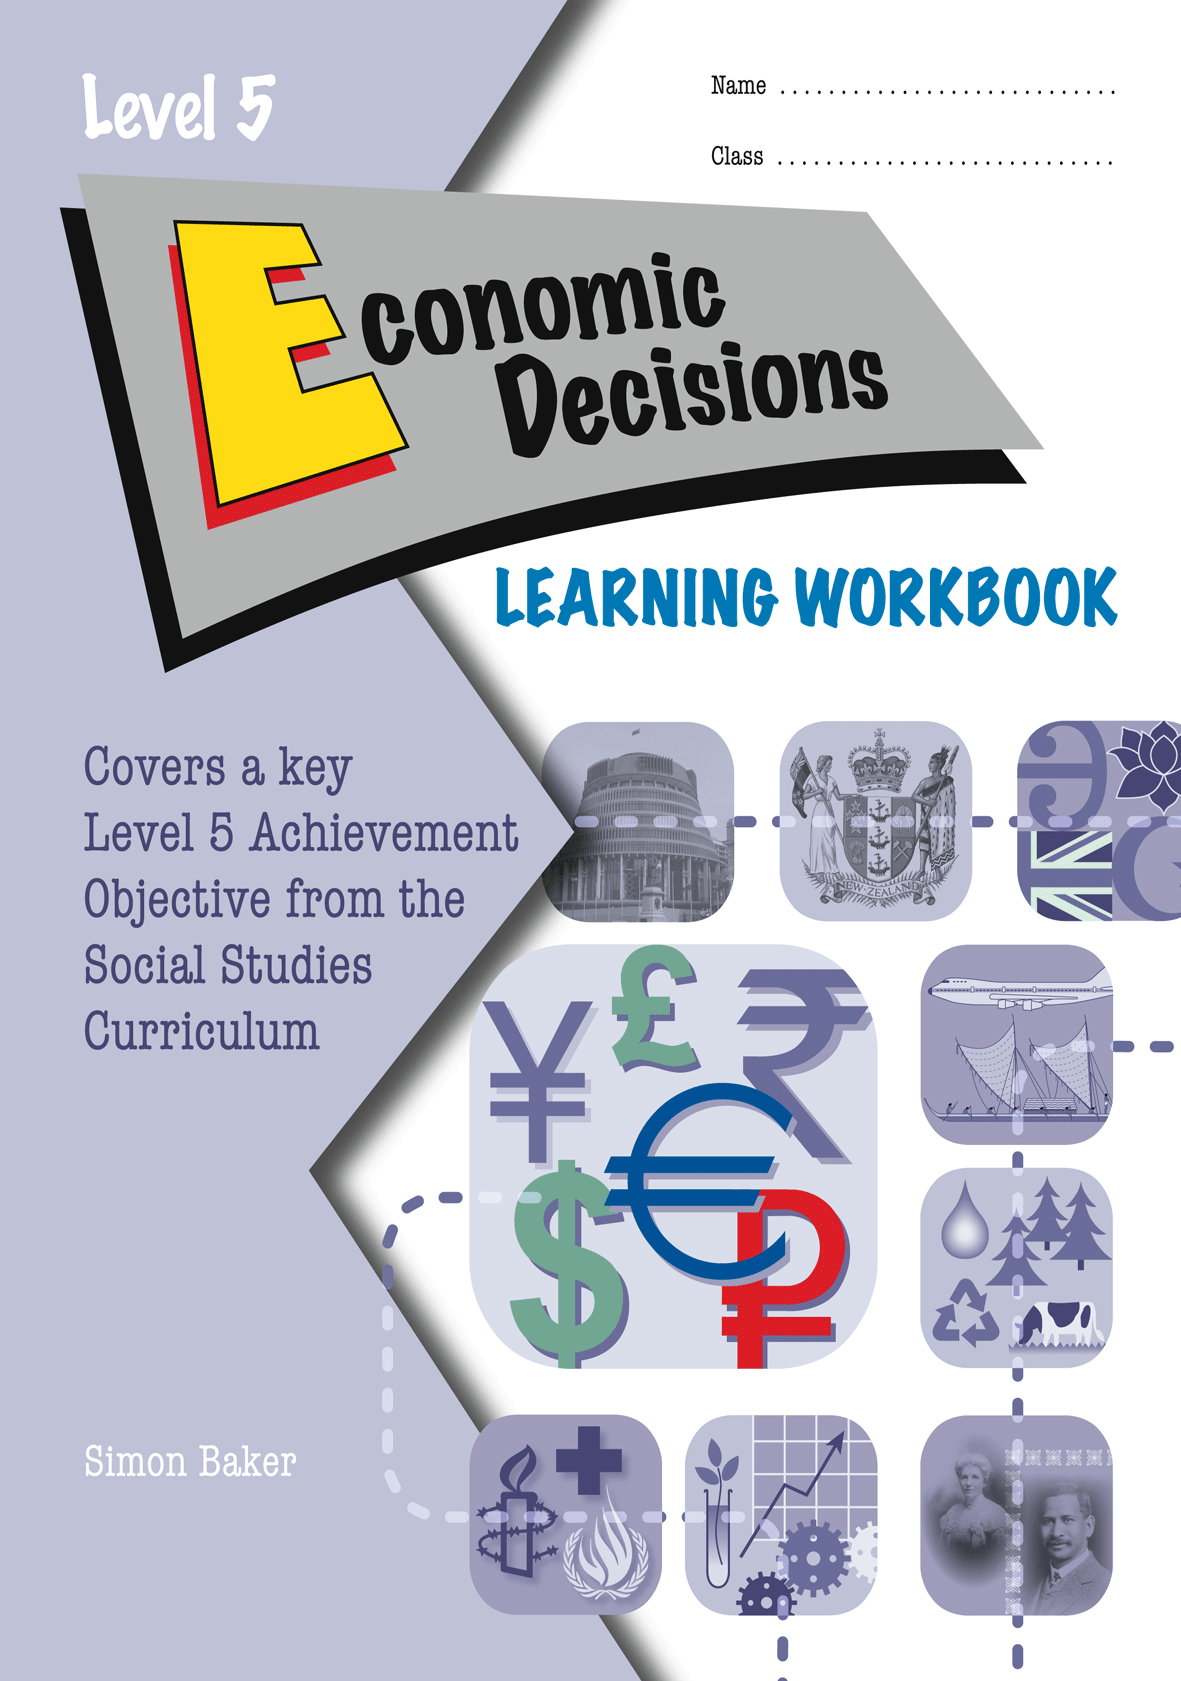 Level 5 Economic Decisions Learning Workbook